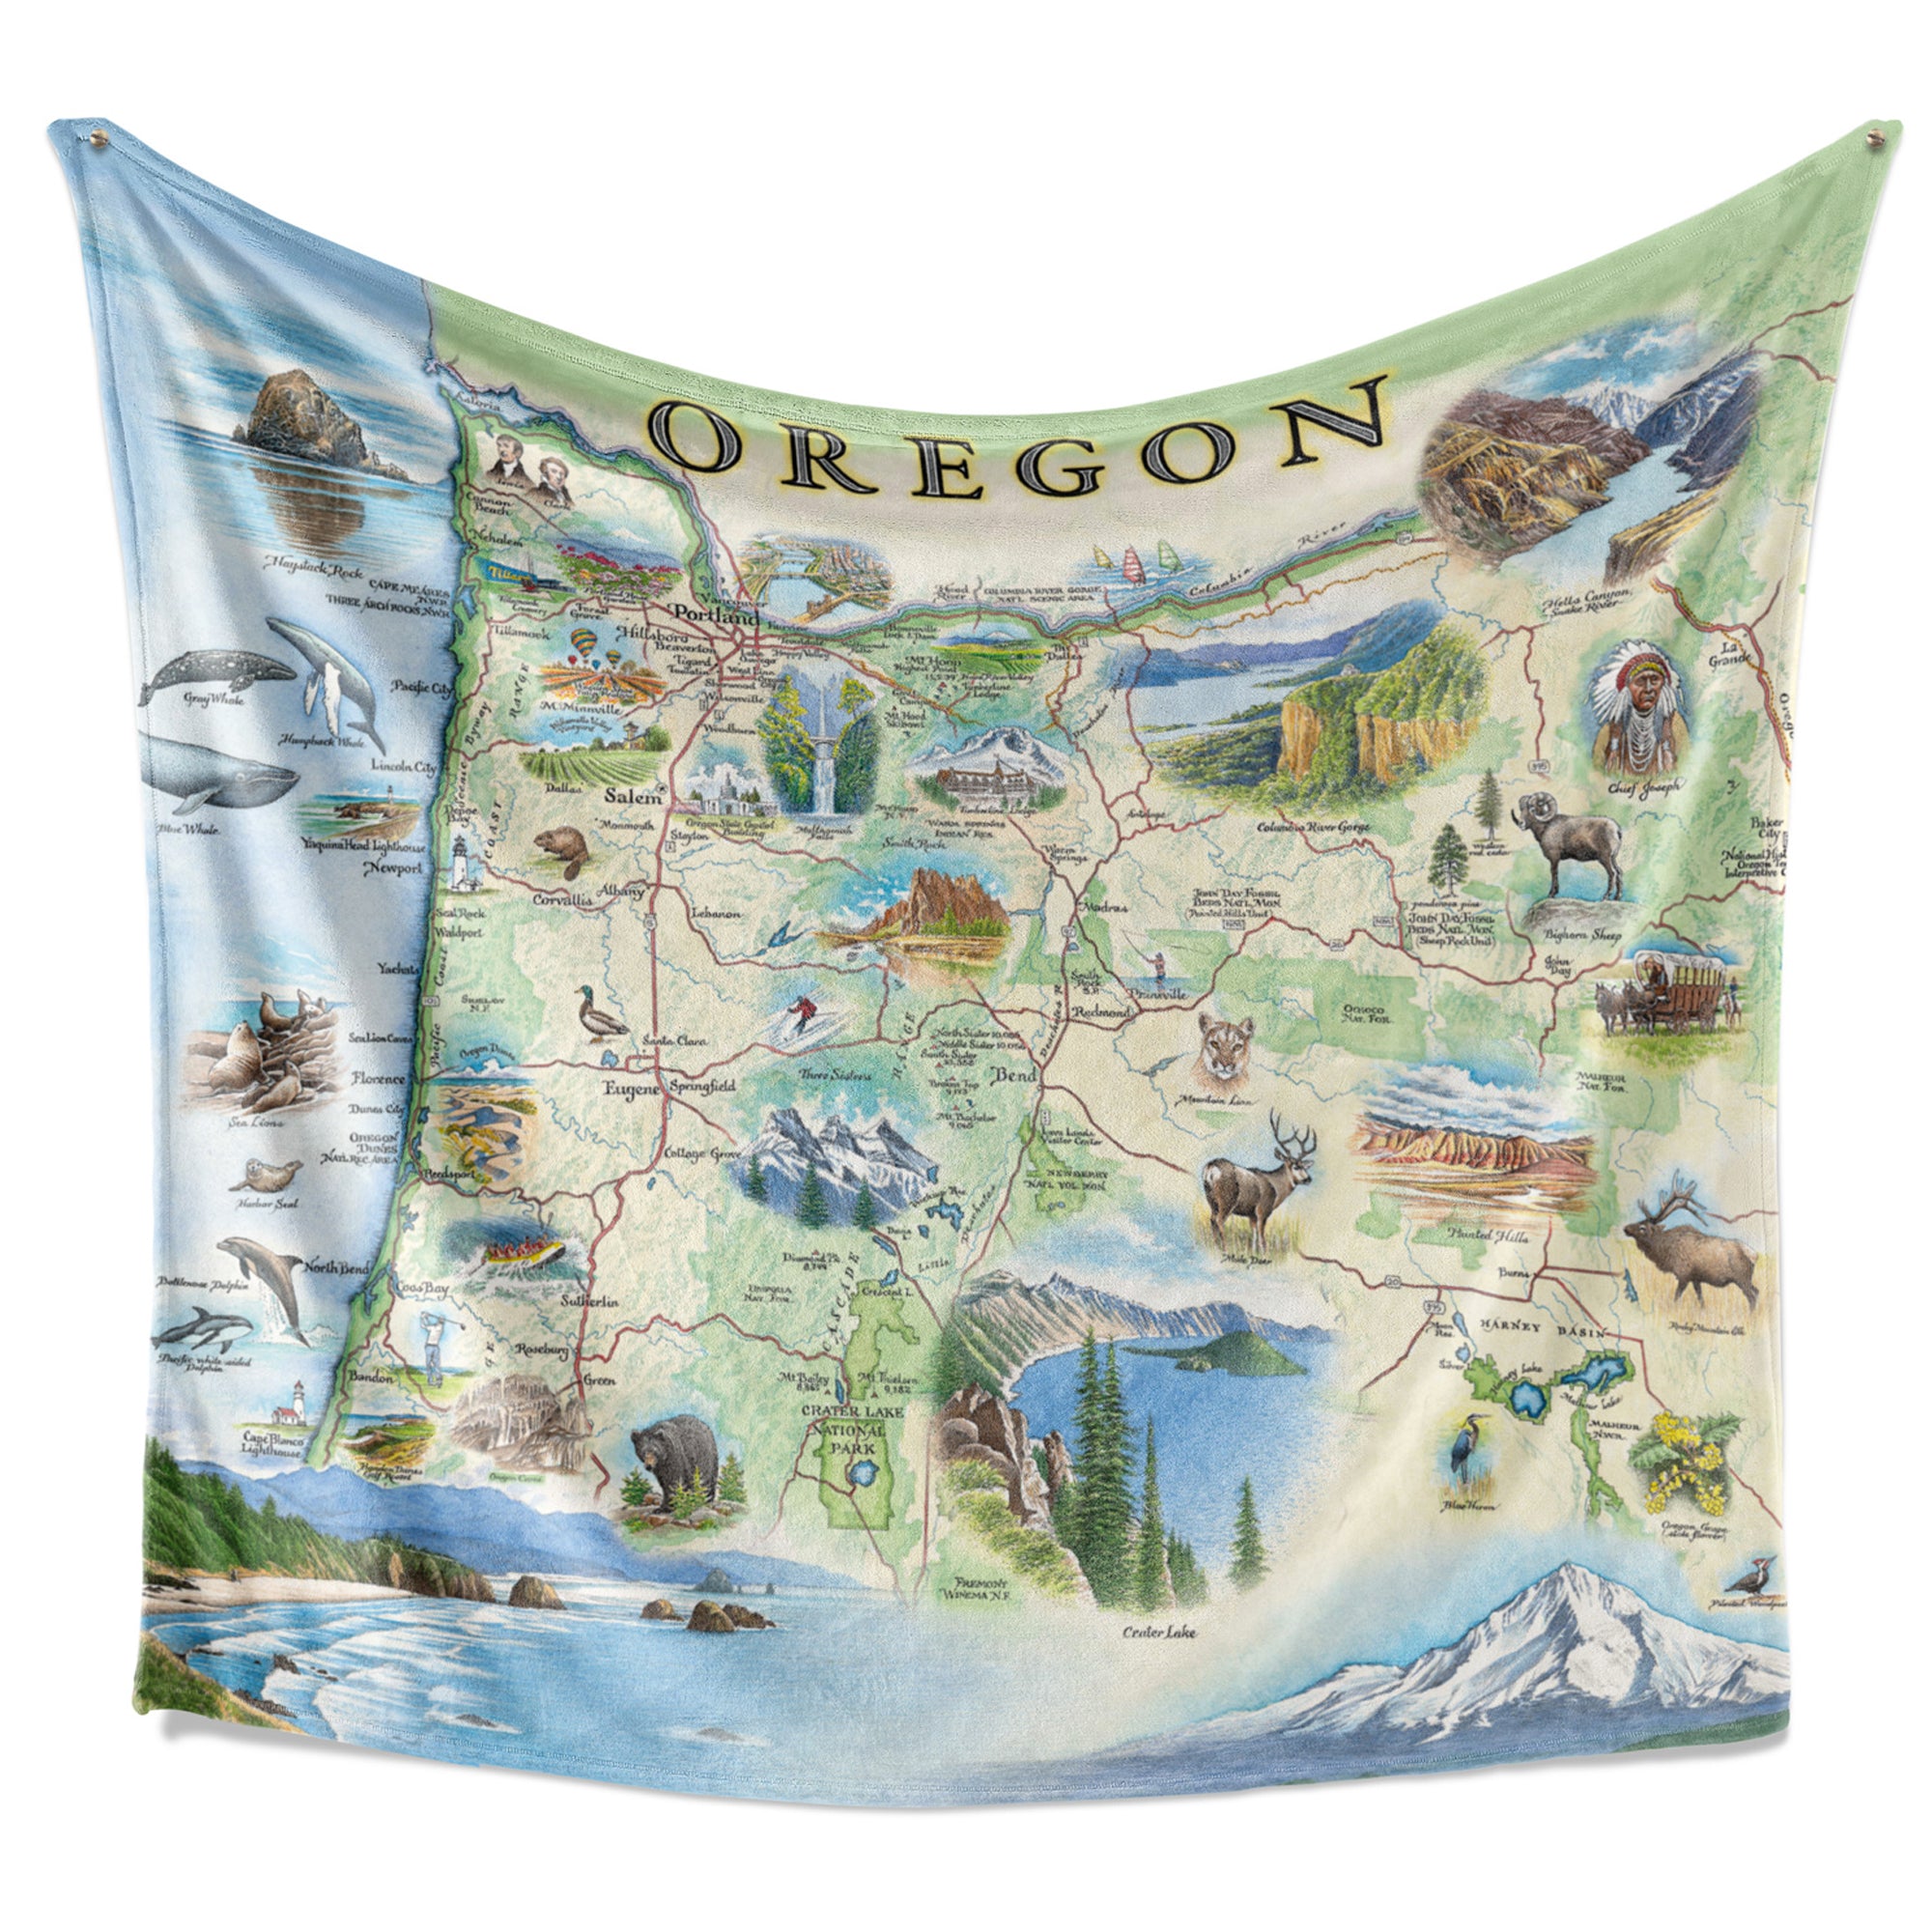 Hanging Oregon fleece blanket. Hand-drawn artistic map of Oregon. Blanket measures 58